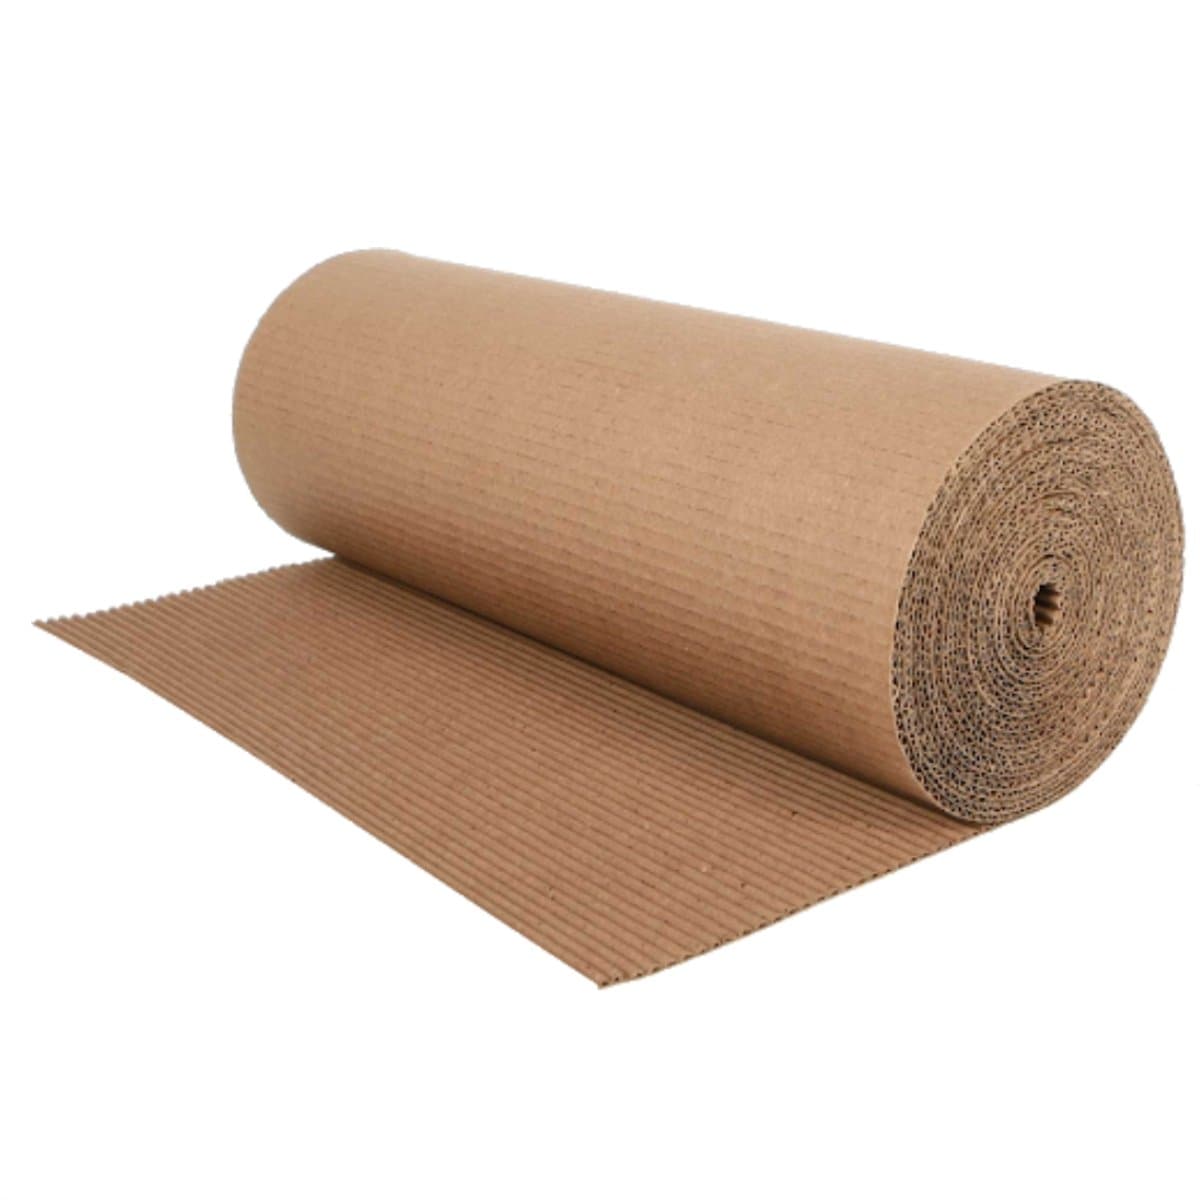 Corrugated Cardboard Roll, 1.5 x 50 m, 25 kg - Office Supplies